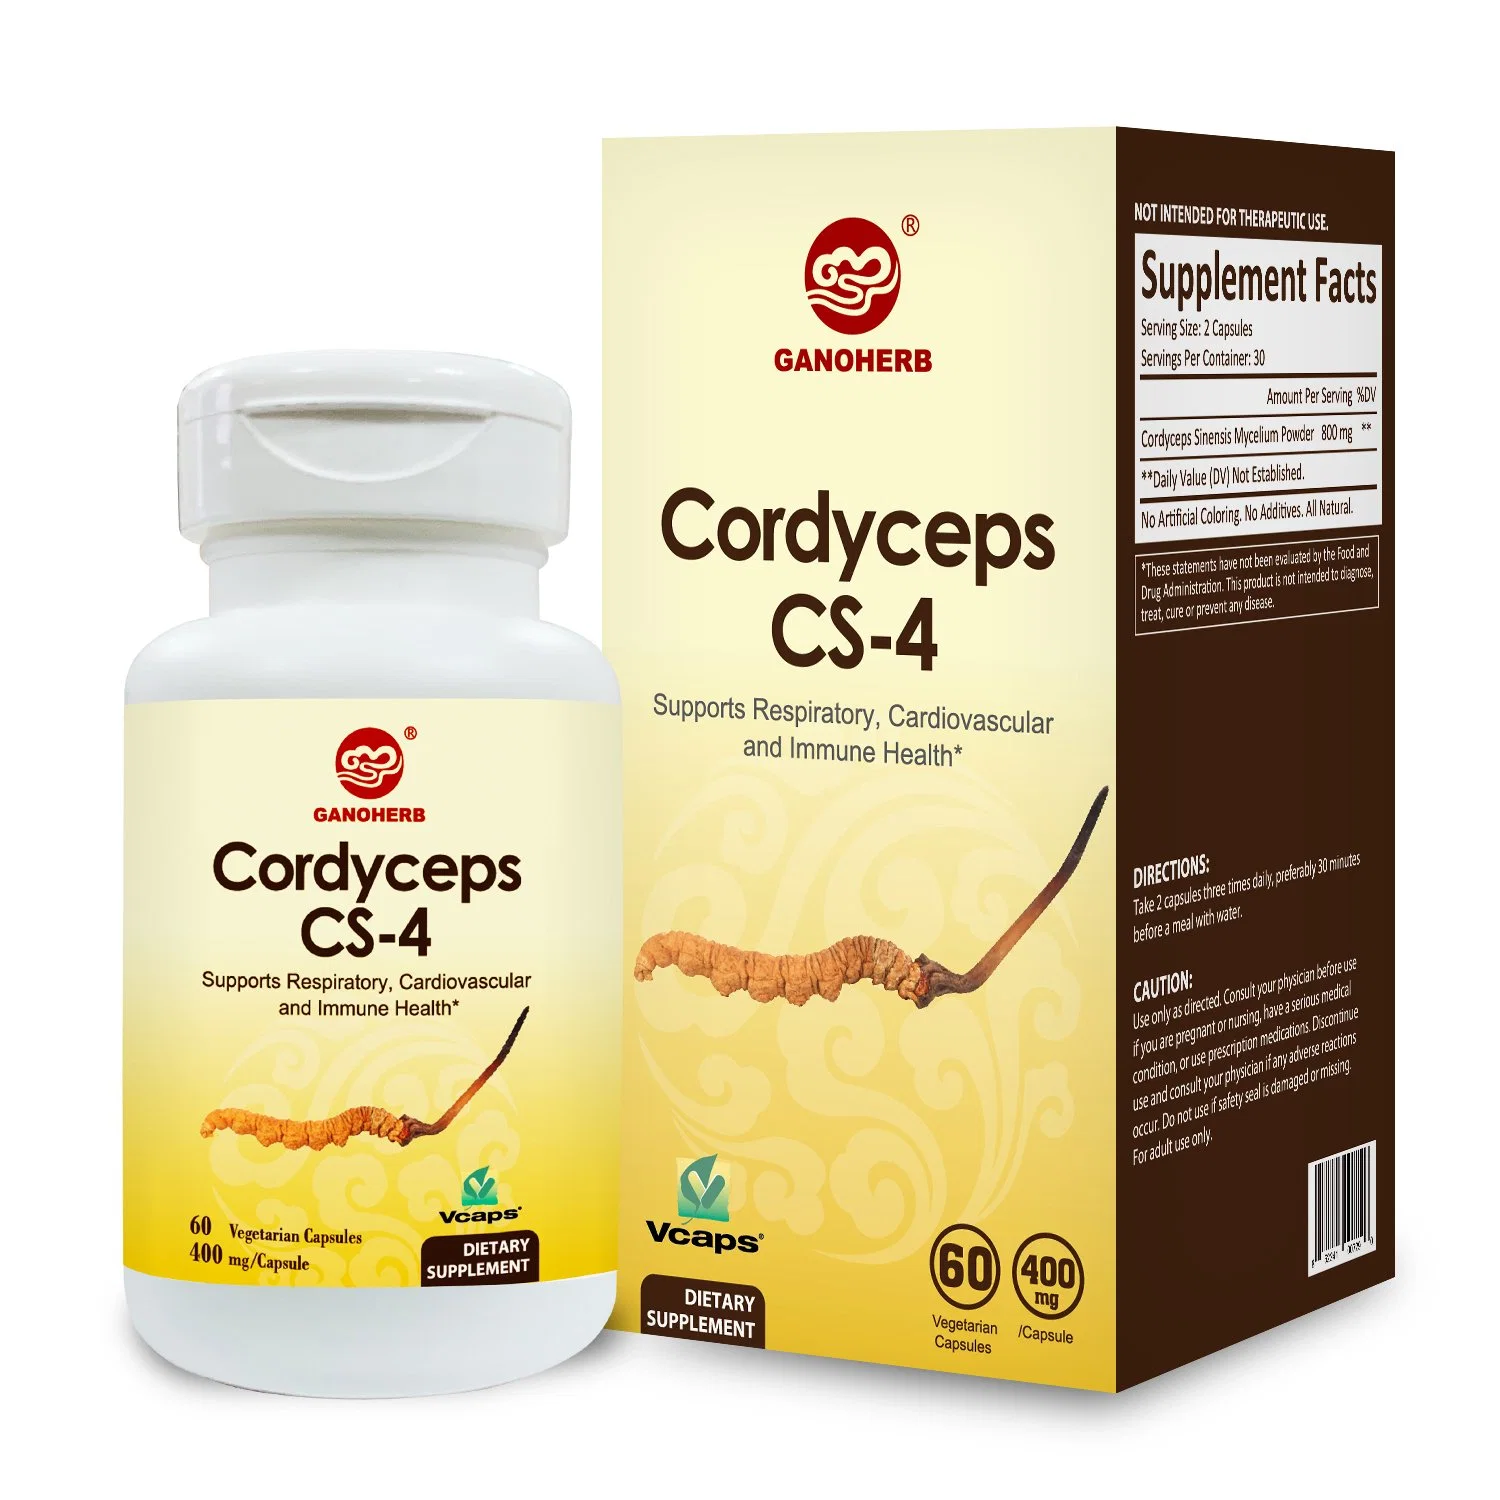 No OMG Pure CS-4 Cordyceps Libre de Gluten de Cordyceps sinensis Extracto de hongos suplemento de 400 mg 60 cápsulas China fabricante OEM